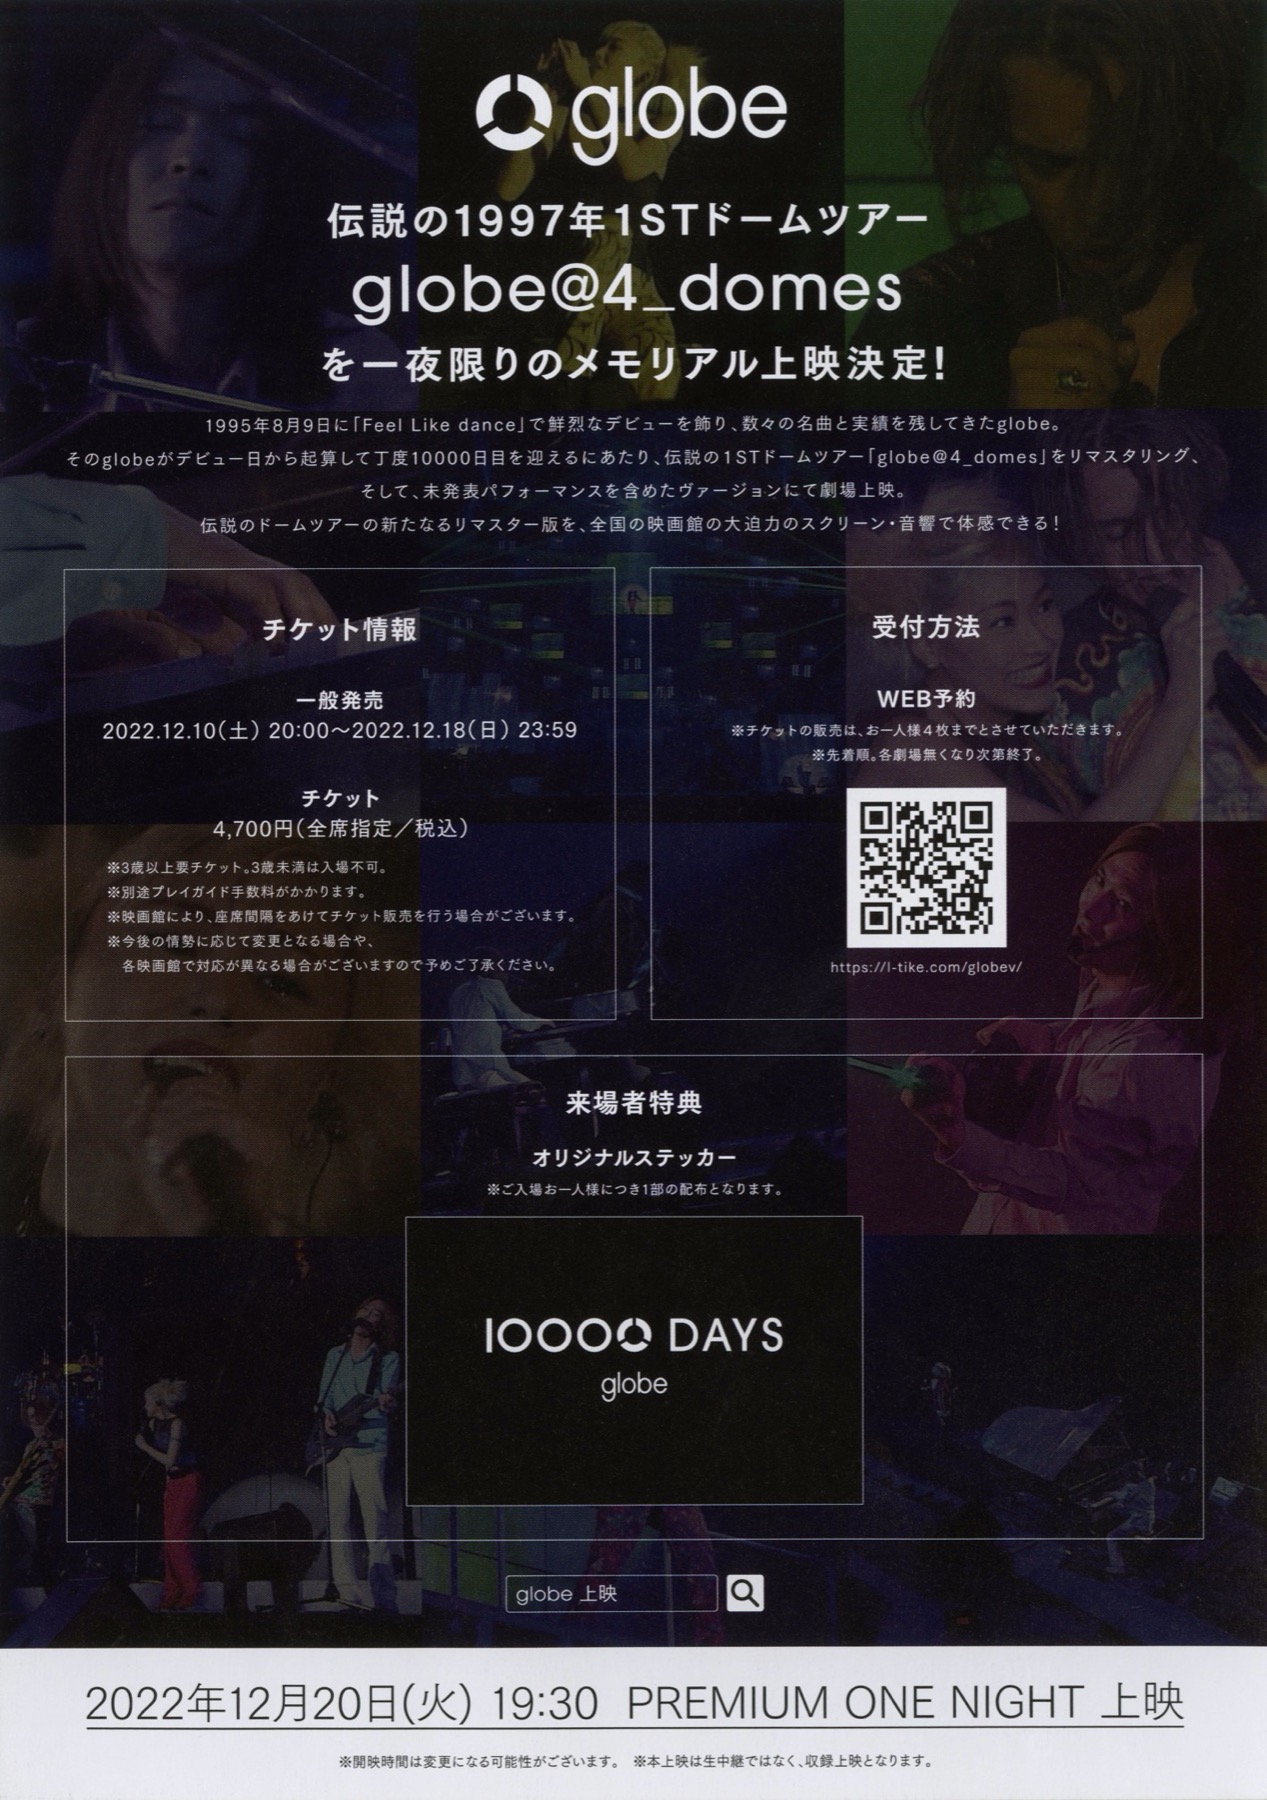 globe@4_domes 10000 DAYS リマスター メモリアル ビューイング